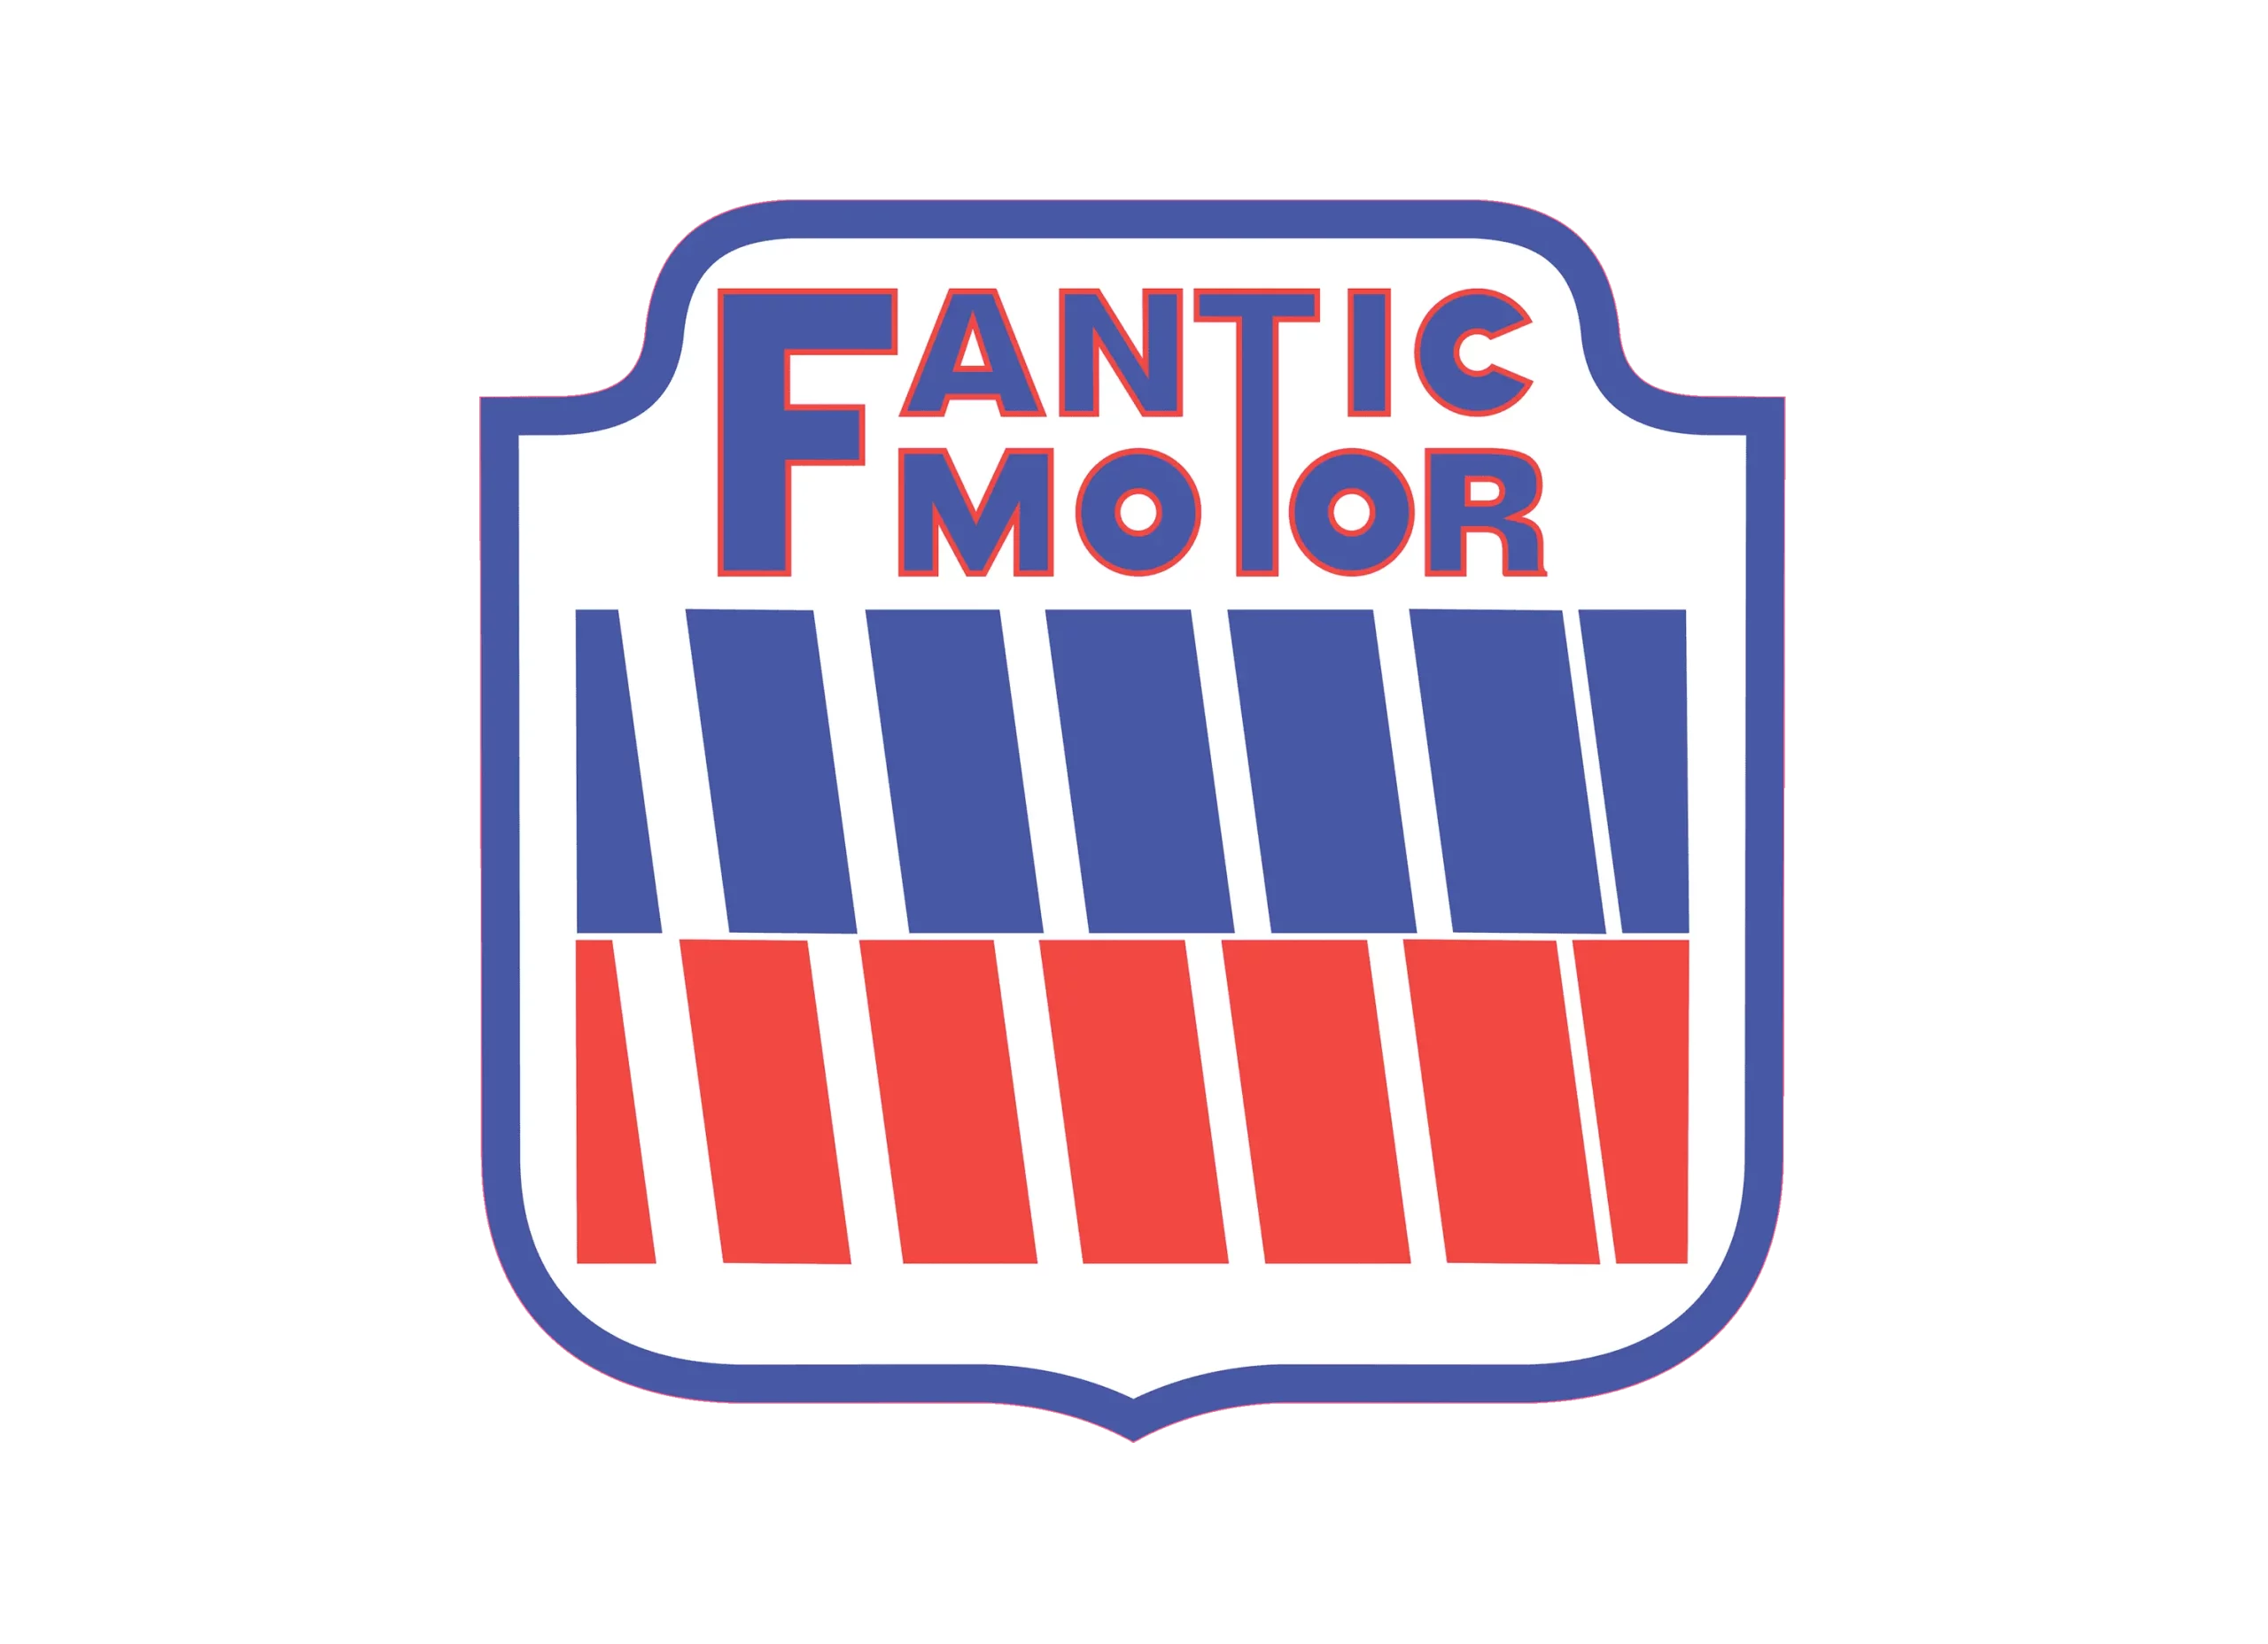 Fantic Motor logo 1968-2016